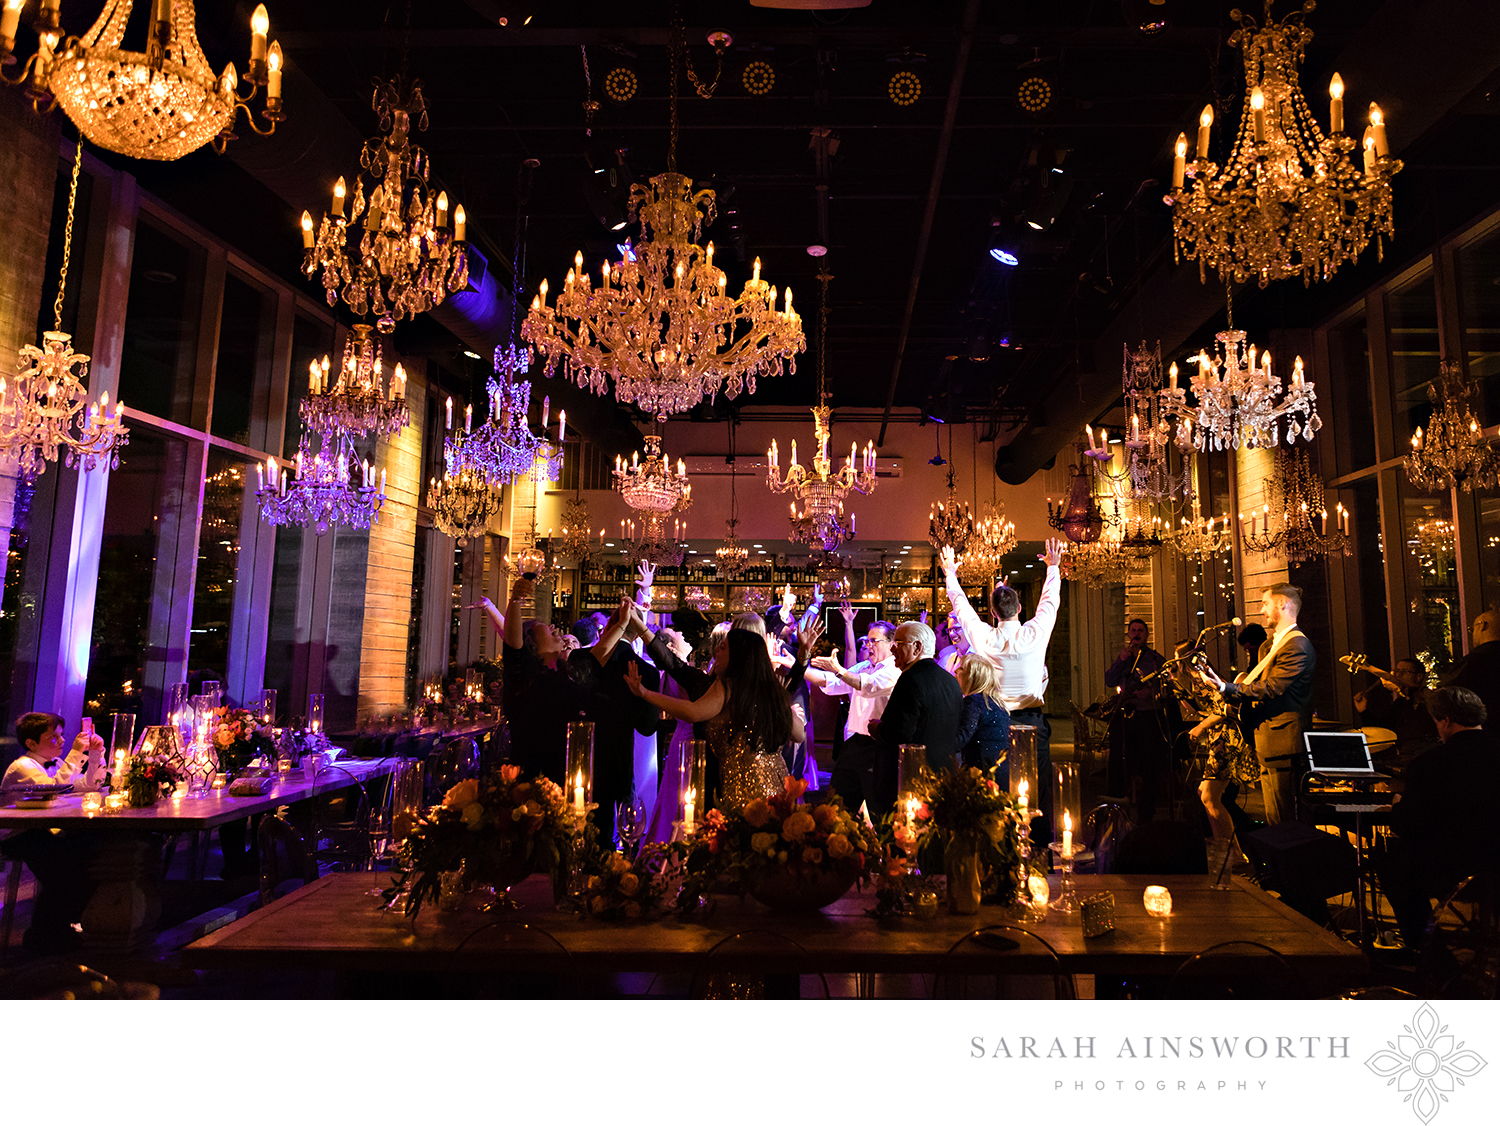 20_the-dunlavy-houston-wedding-houston-wedding-venue-with-chandeliers-houston-restaurants-as-wedding-venues_04.jpg